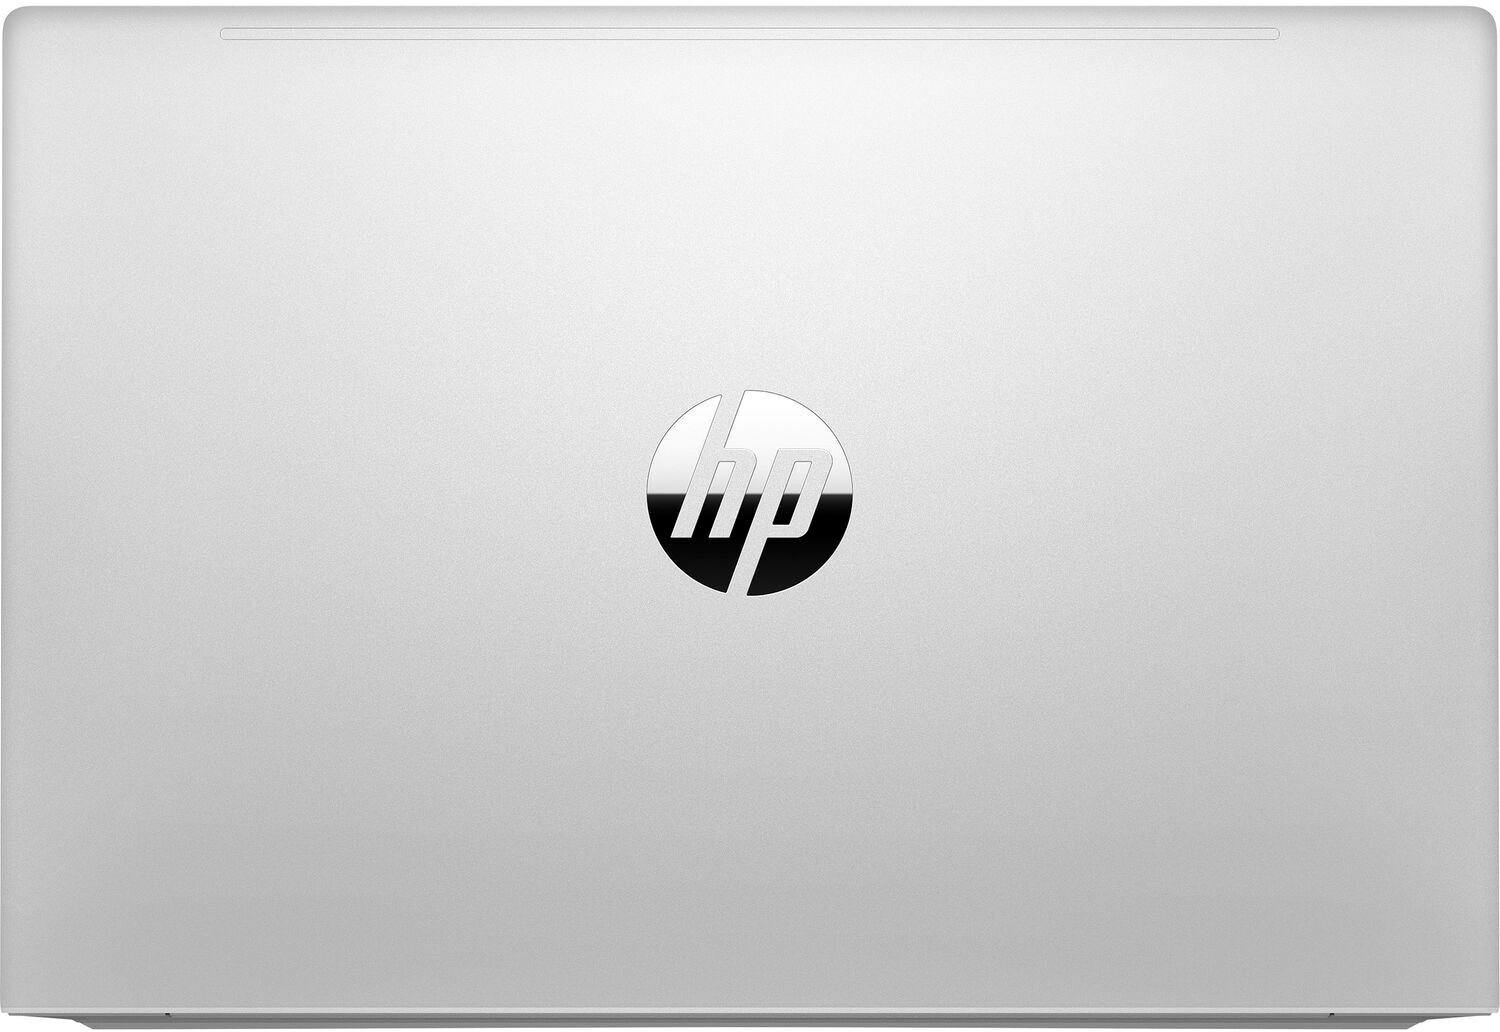 Ноутбук HP НP ProBook 430 G8 Core i5-1135G7 2.4GHz, 13.3 FHD (1920x1080) AG 8GB DDR4 (1),256GB SSD,45Wh LL,Service Door,FPR,1.5kg,1y,Silver,DOS-39393